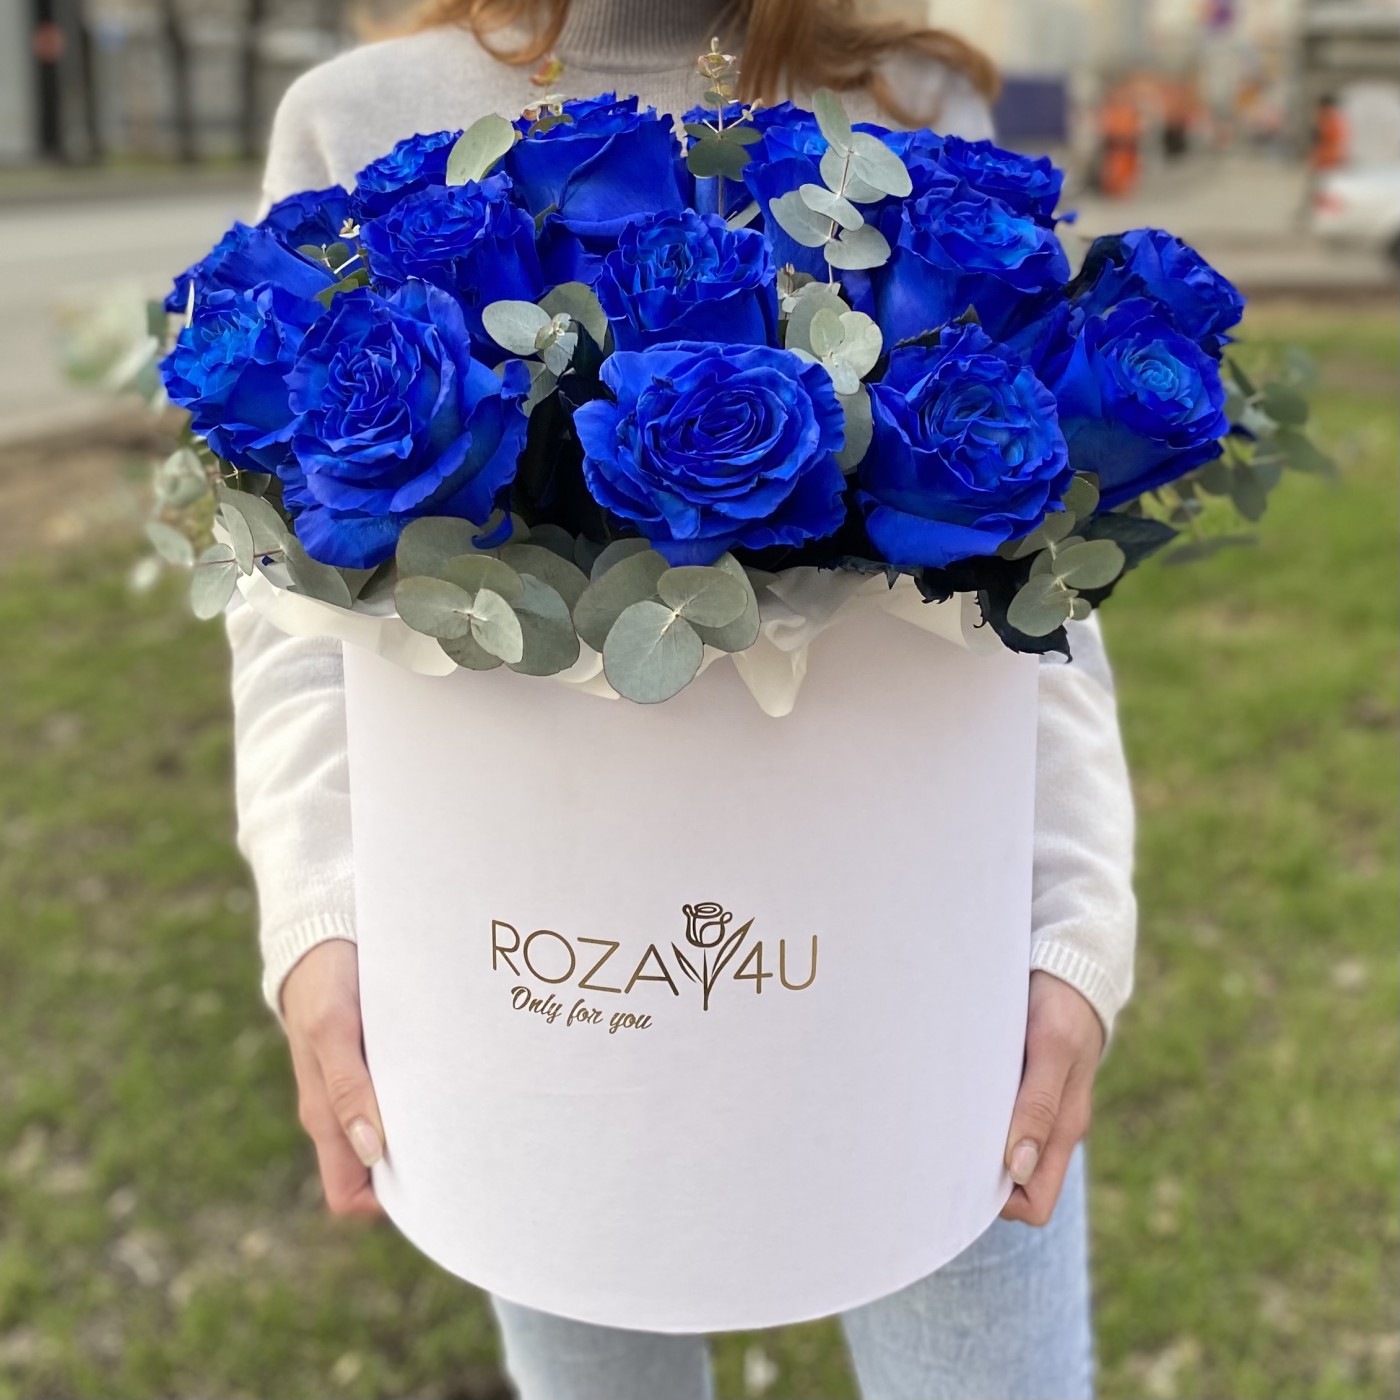 25 синих роз в коробке с эвкалиптом